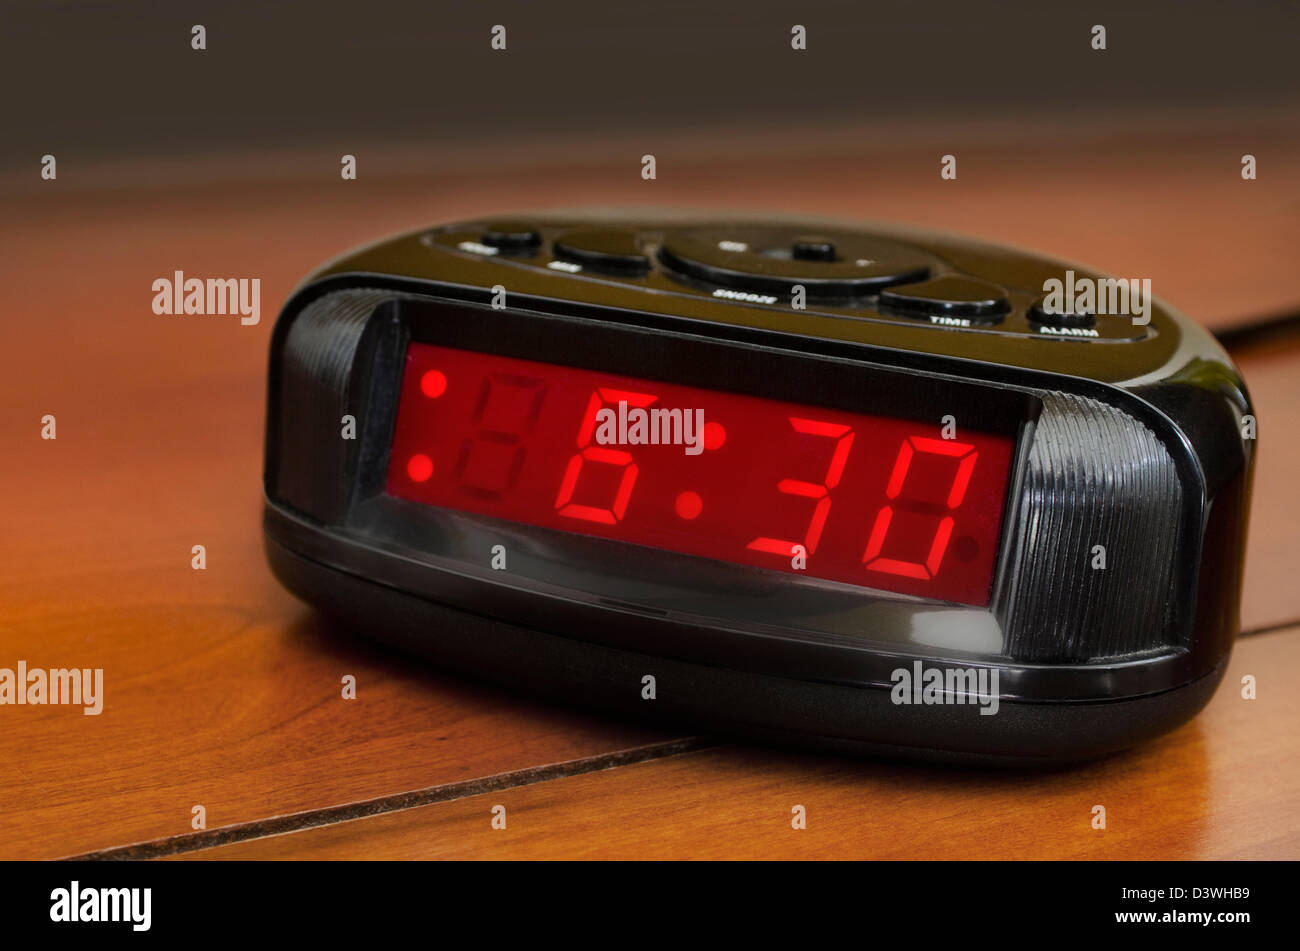 Alarm clock digital 6 -Fotos und -Bildmaterial in hoher Auflösung – Alamy